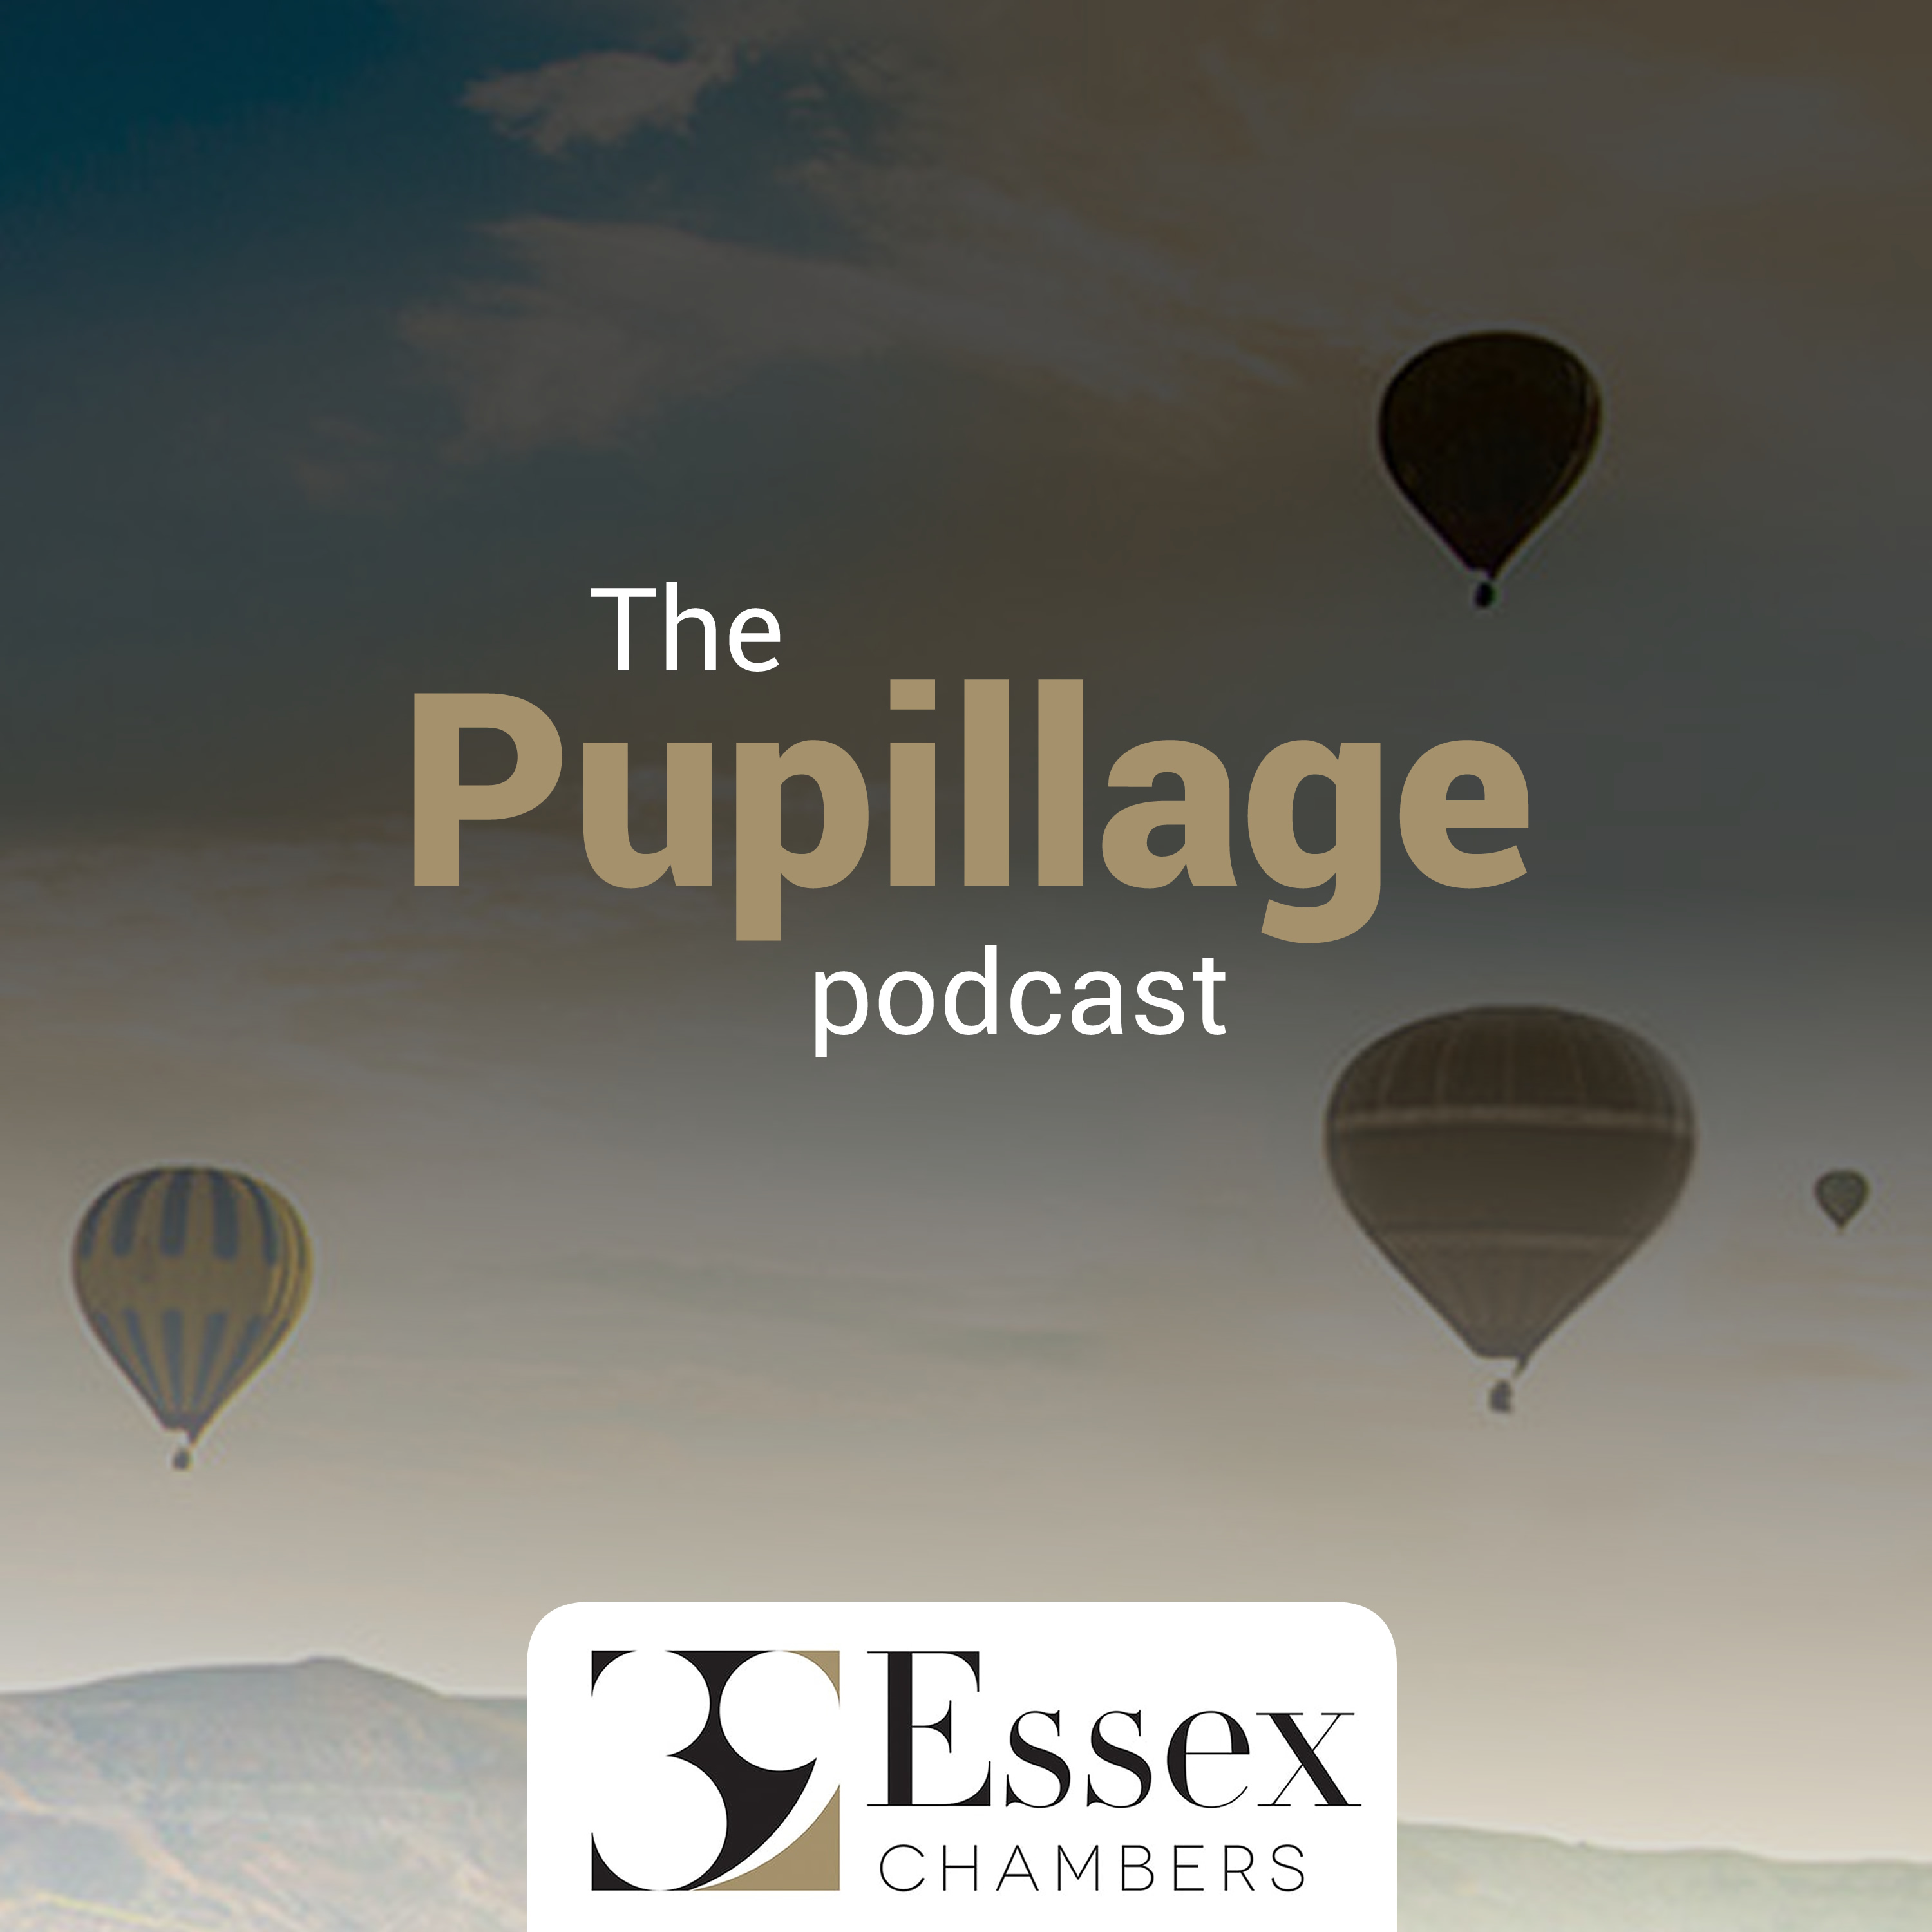 Artwork for podcast The Pupillage Podcast